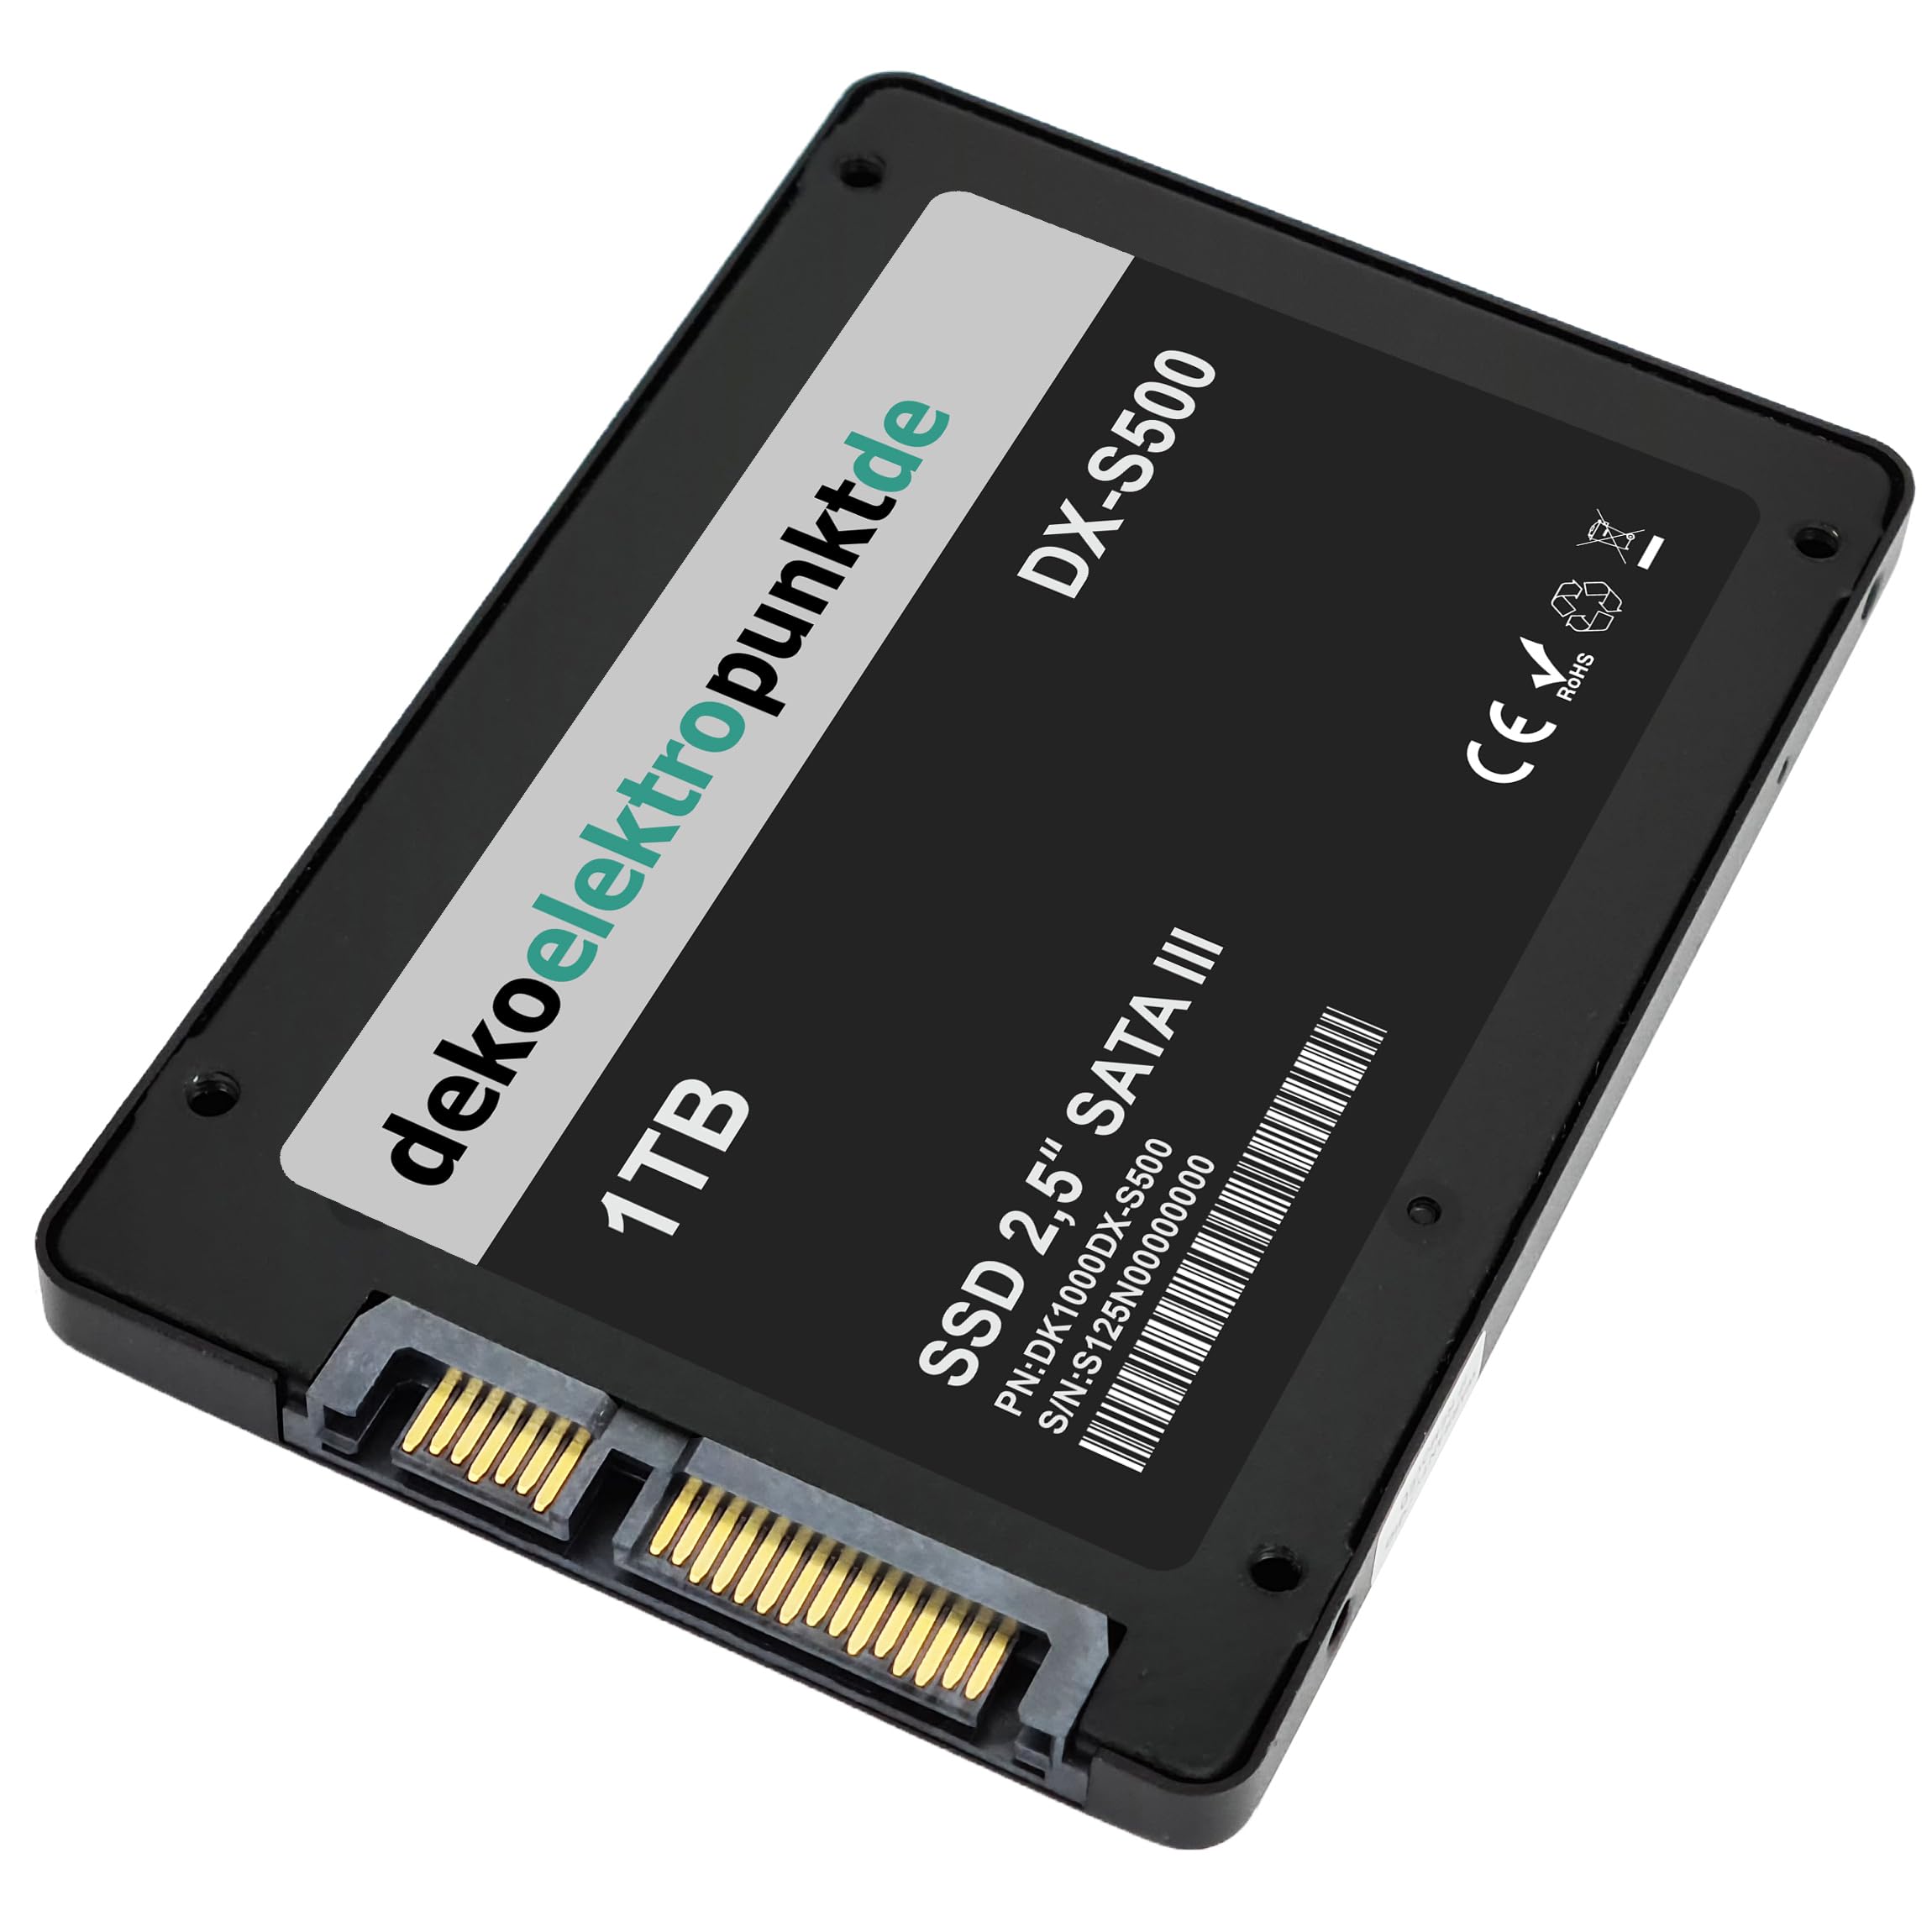 dekoelektropunktde 1TB SSD Festplatte passend für Asus N82JQ-1A, Alternatives Ersatzteil